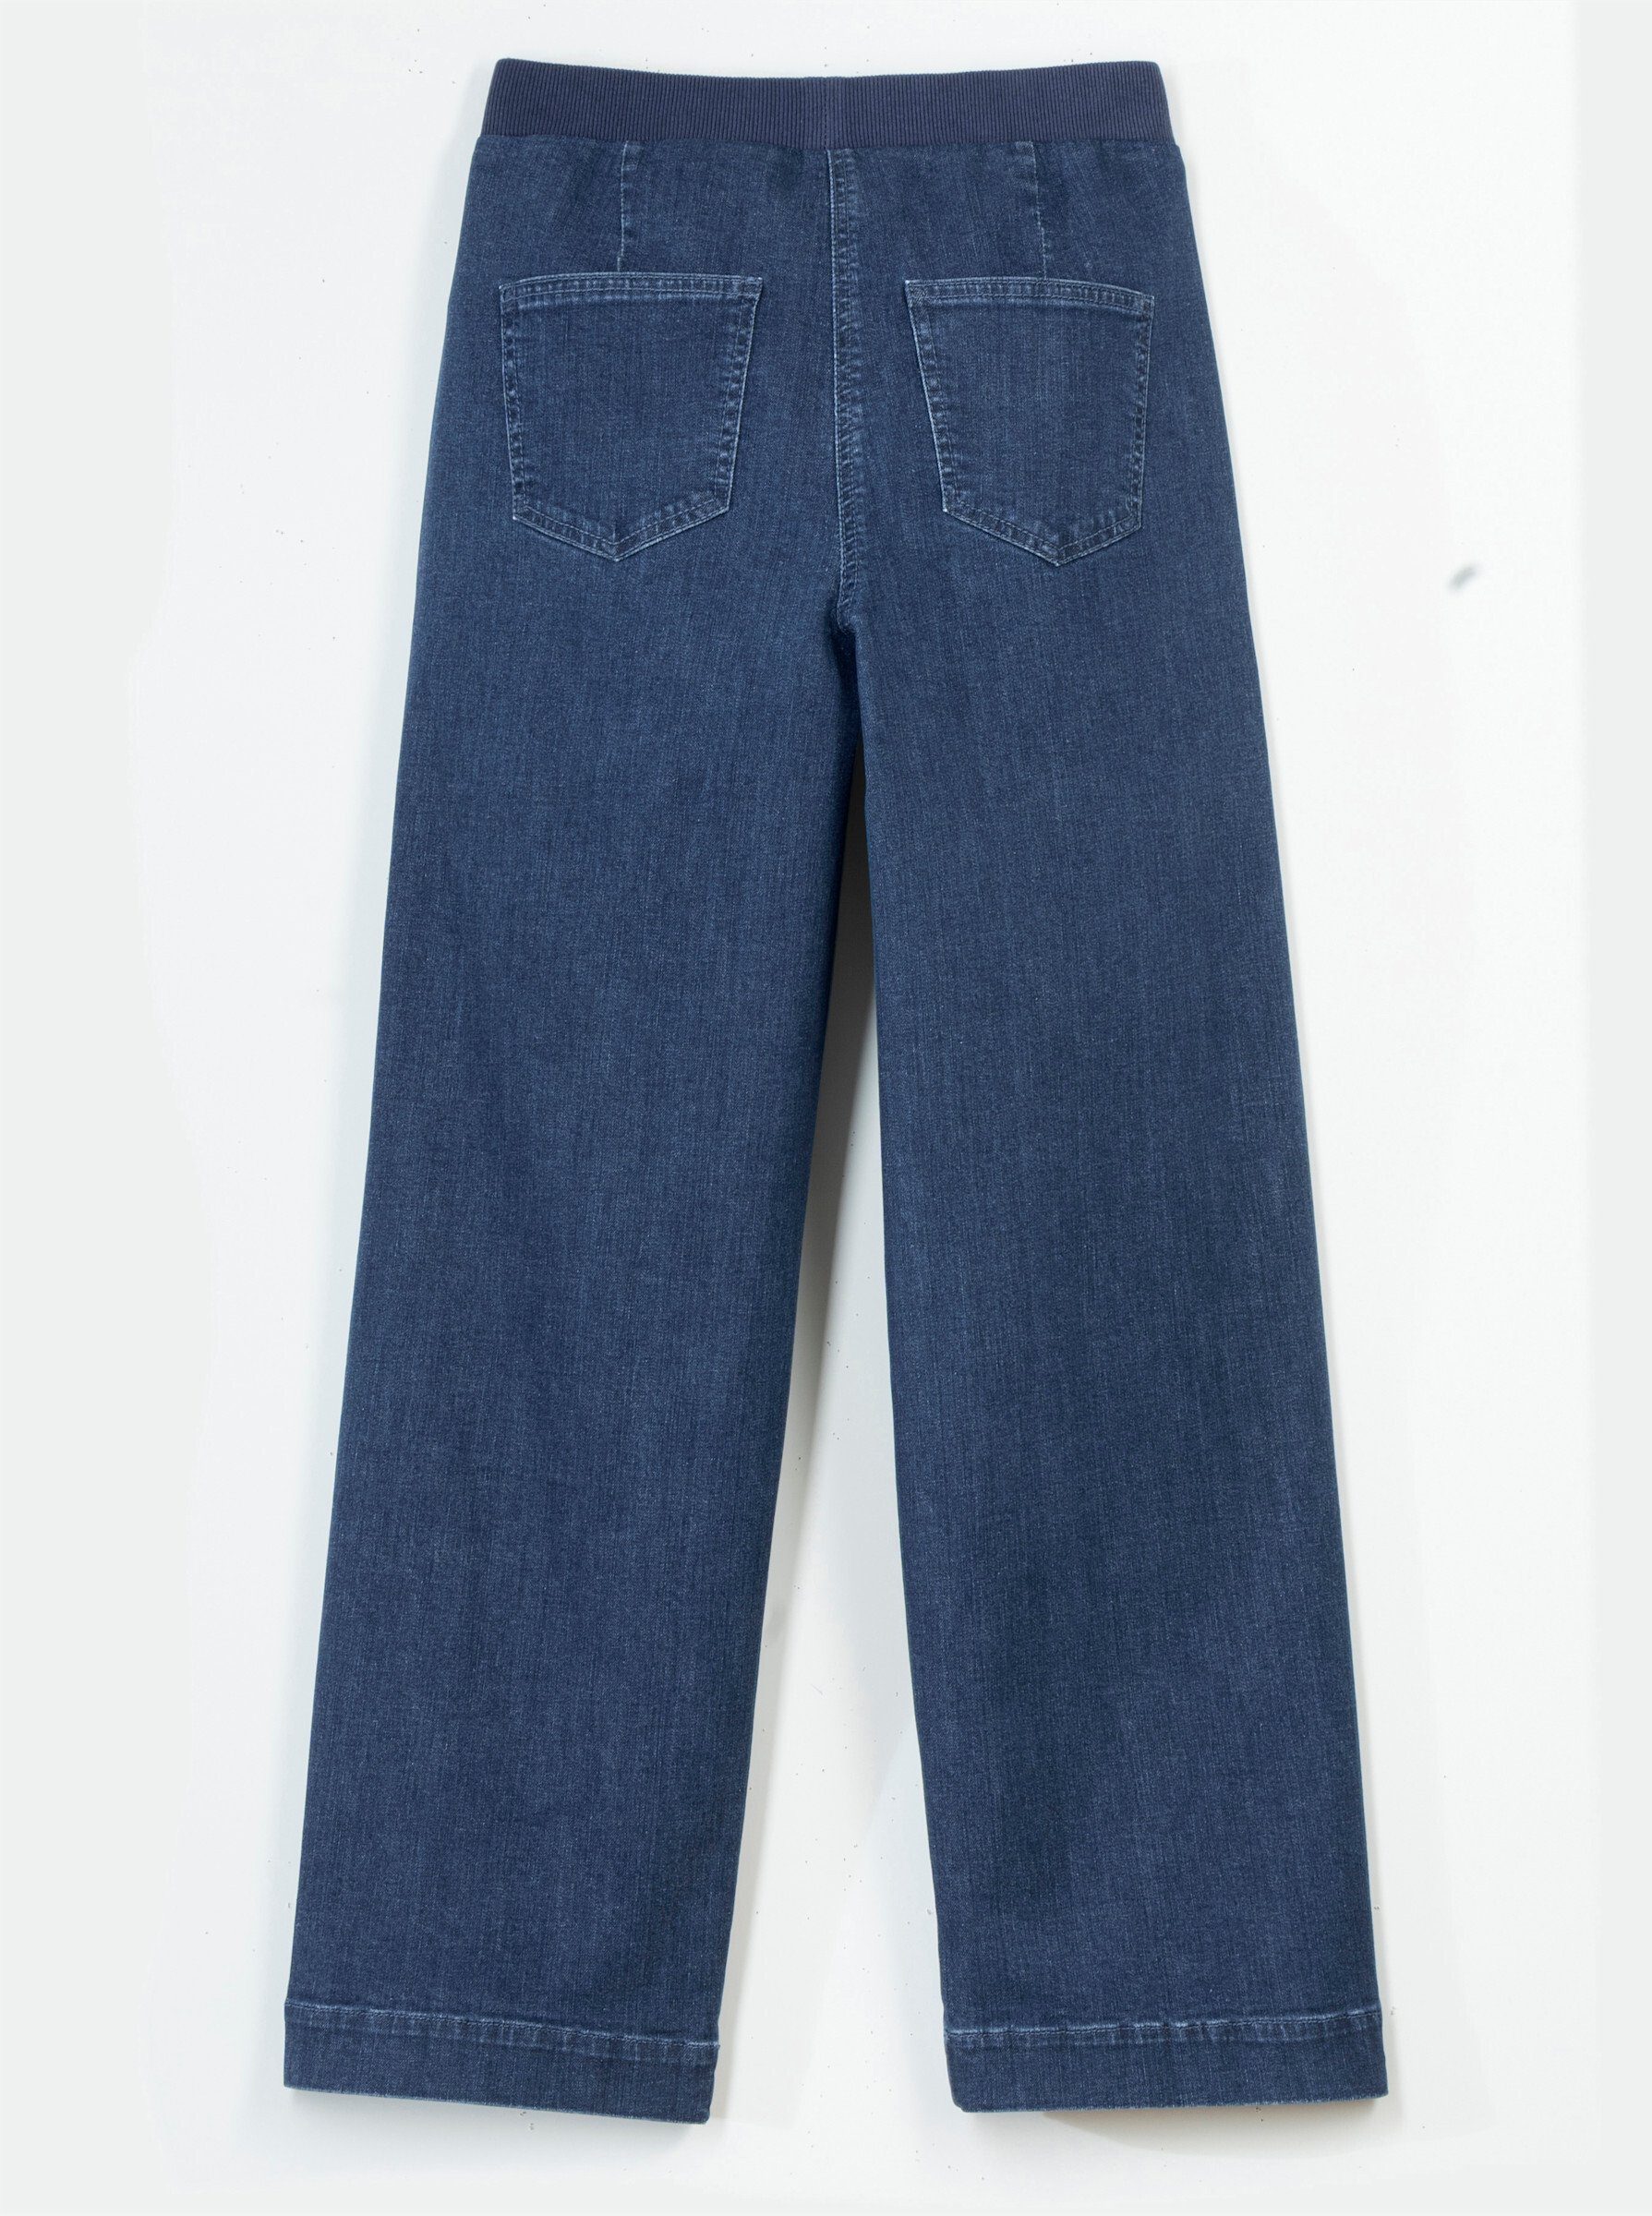 WEIDEN Jeans blue-stone-washed Bequeme WITT